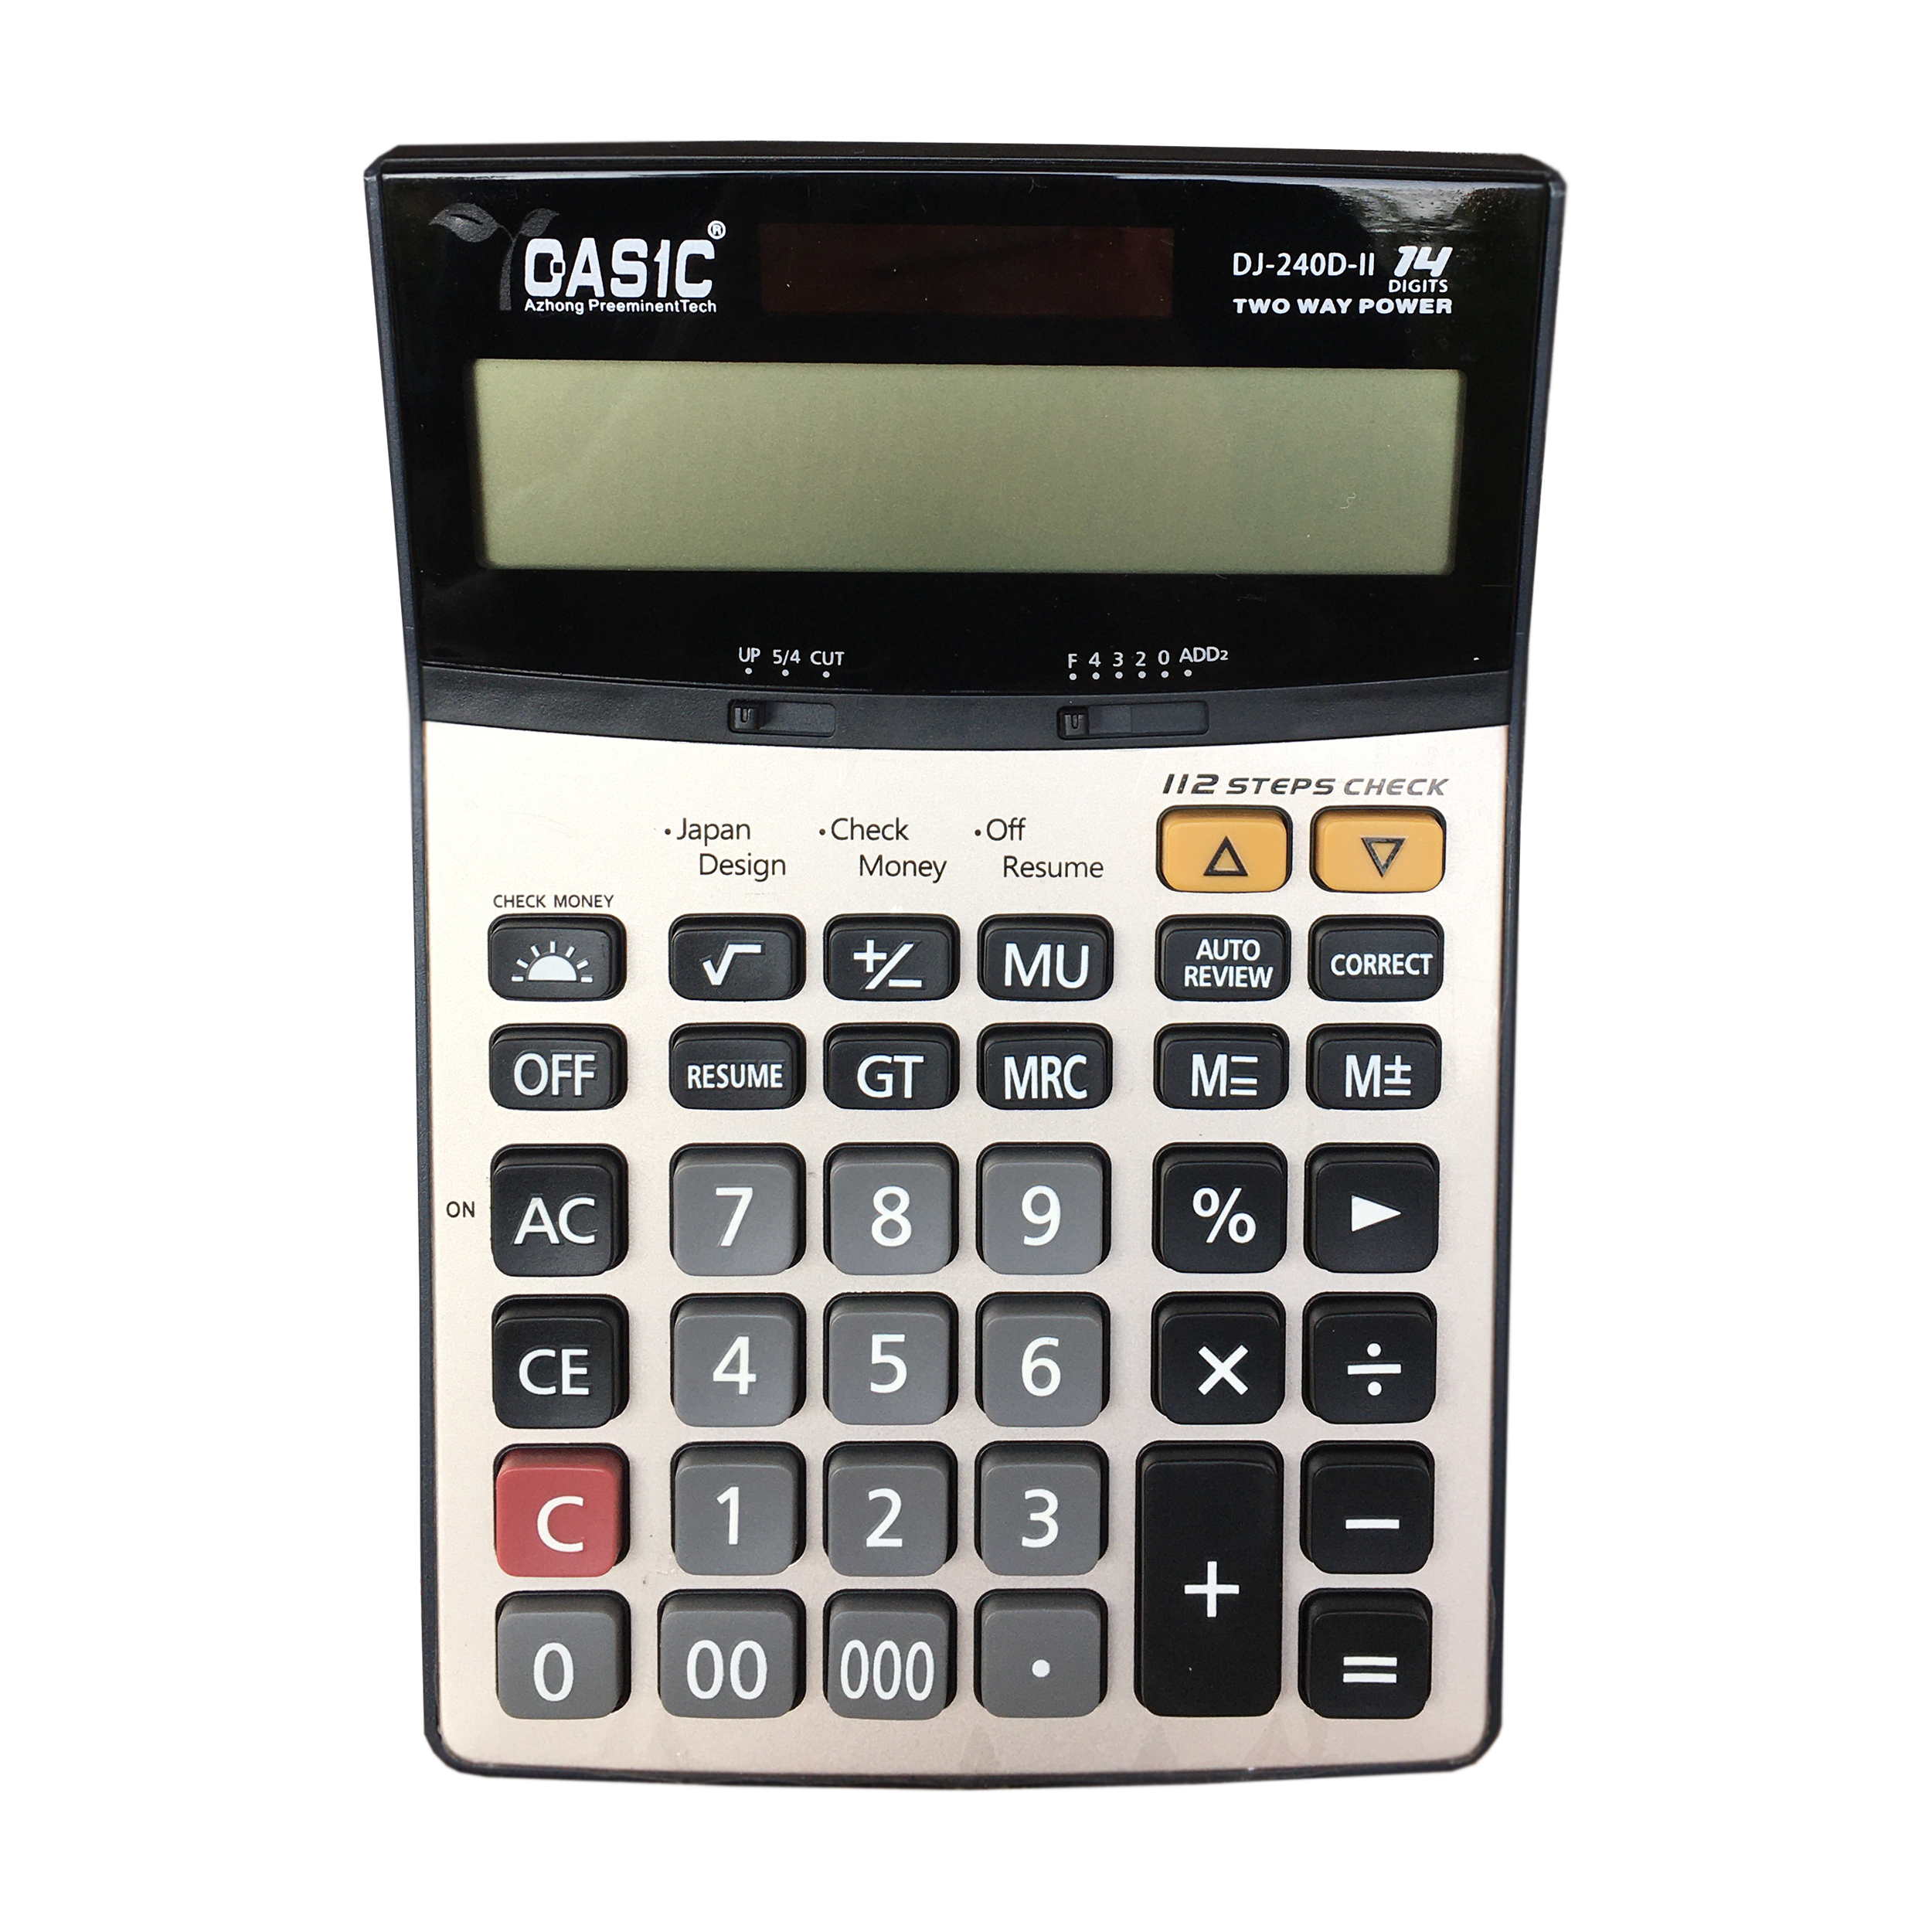  ماشین حساب مدل DJ-240D کاسیک ا DJ-240D Casic Calculator